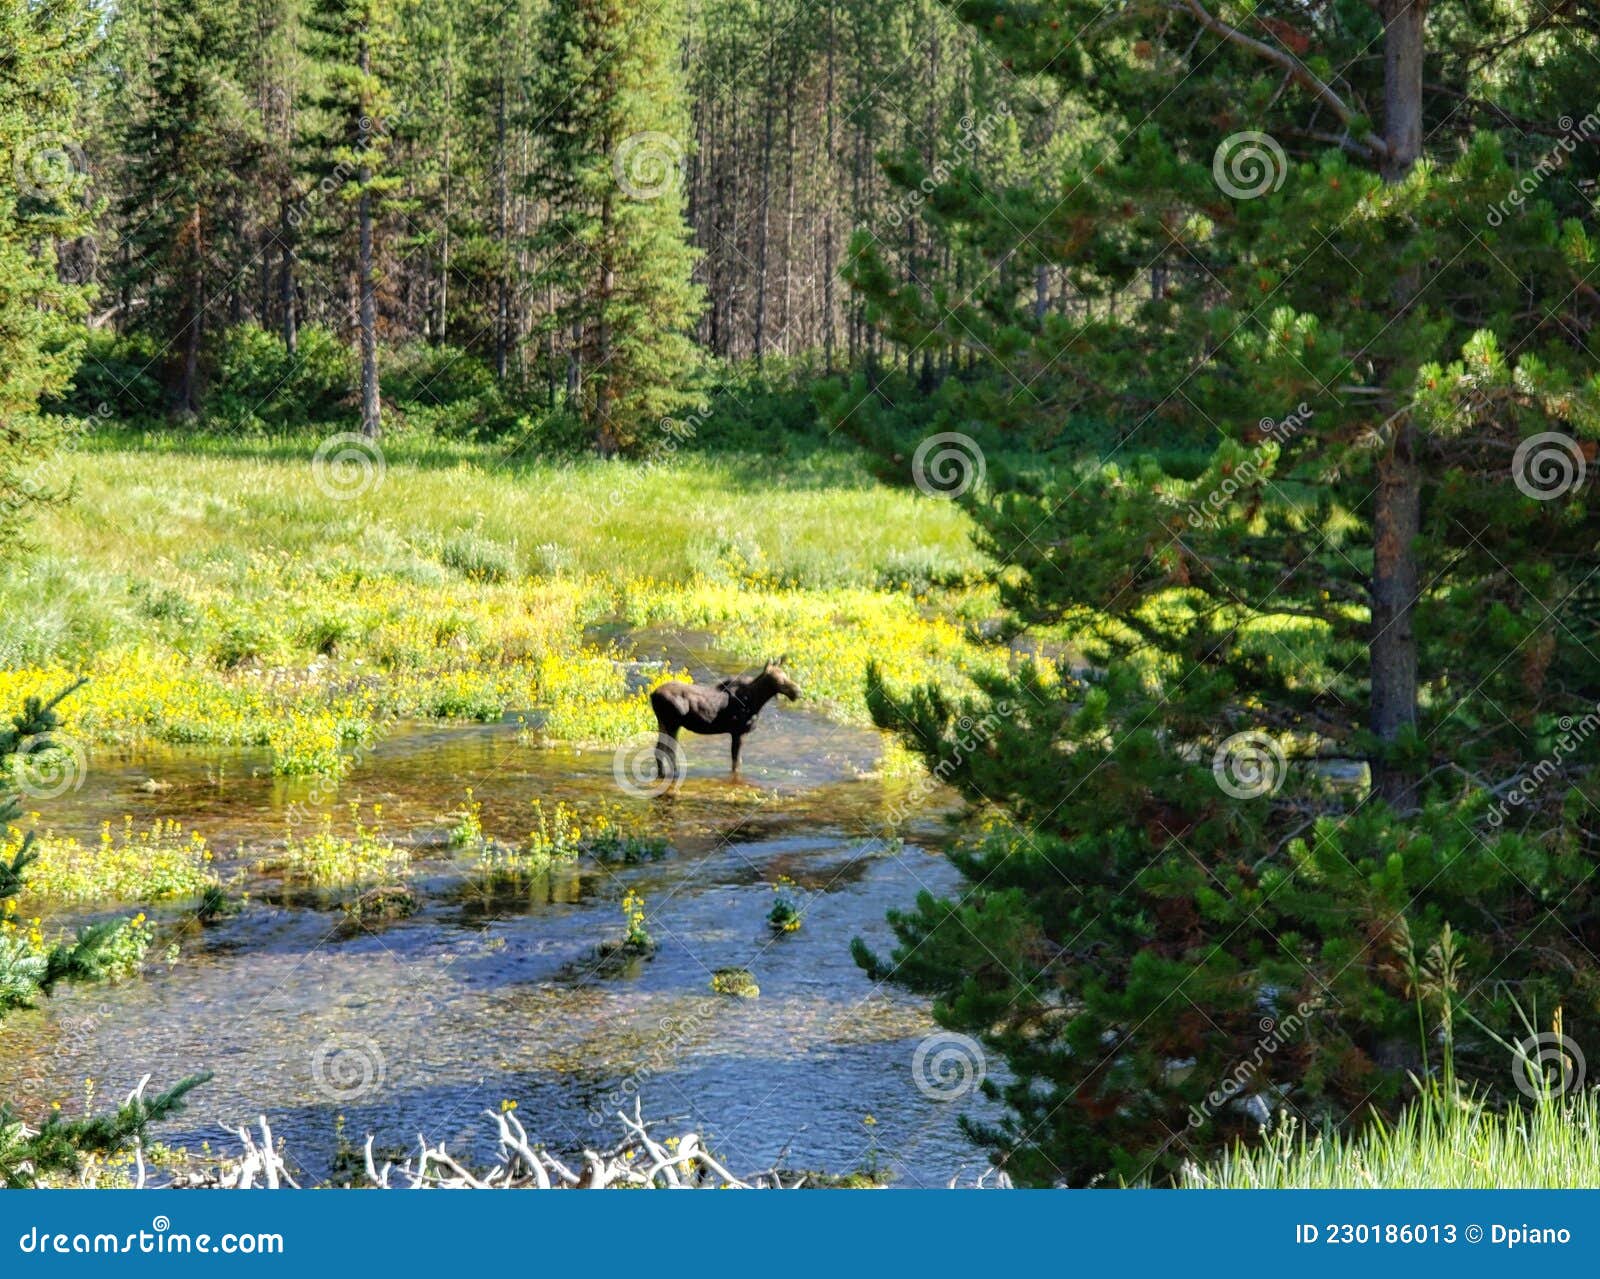 moose in the springs near island park idaho